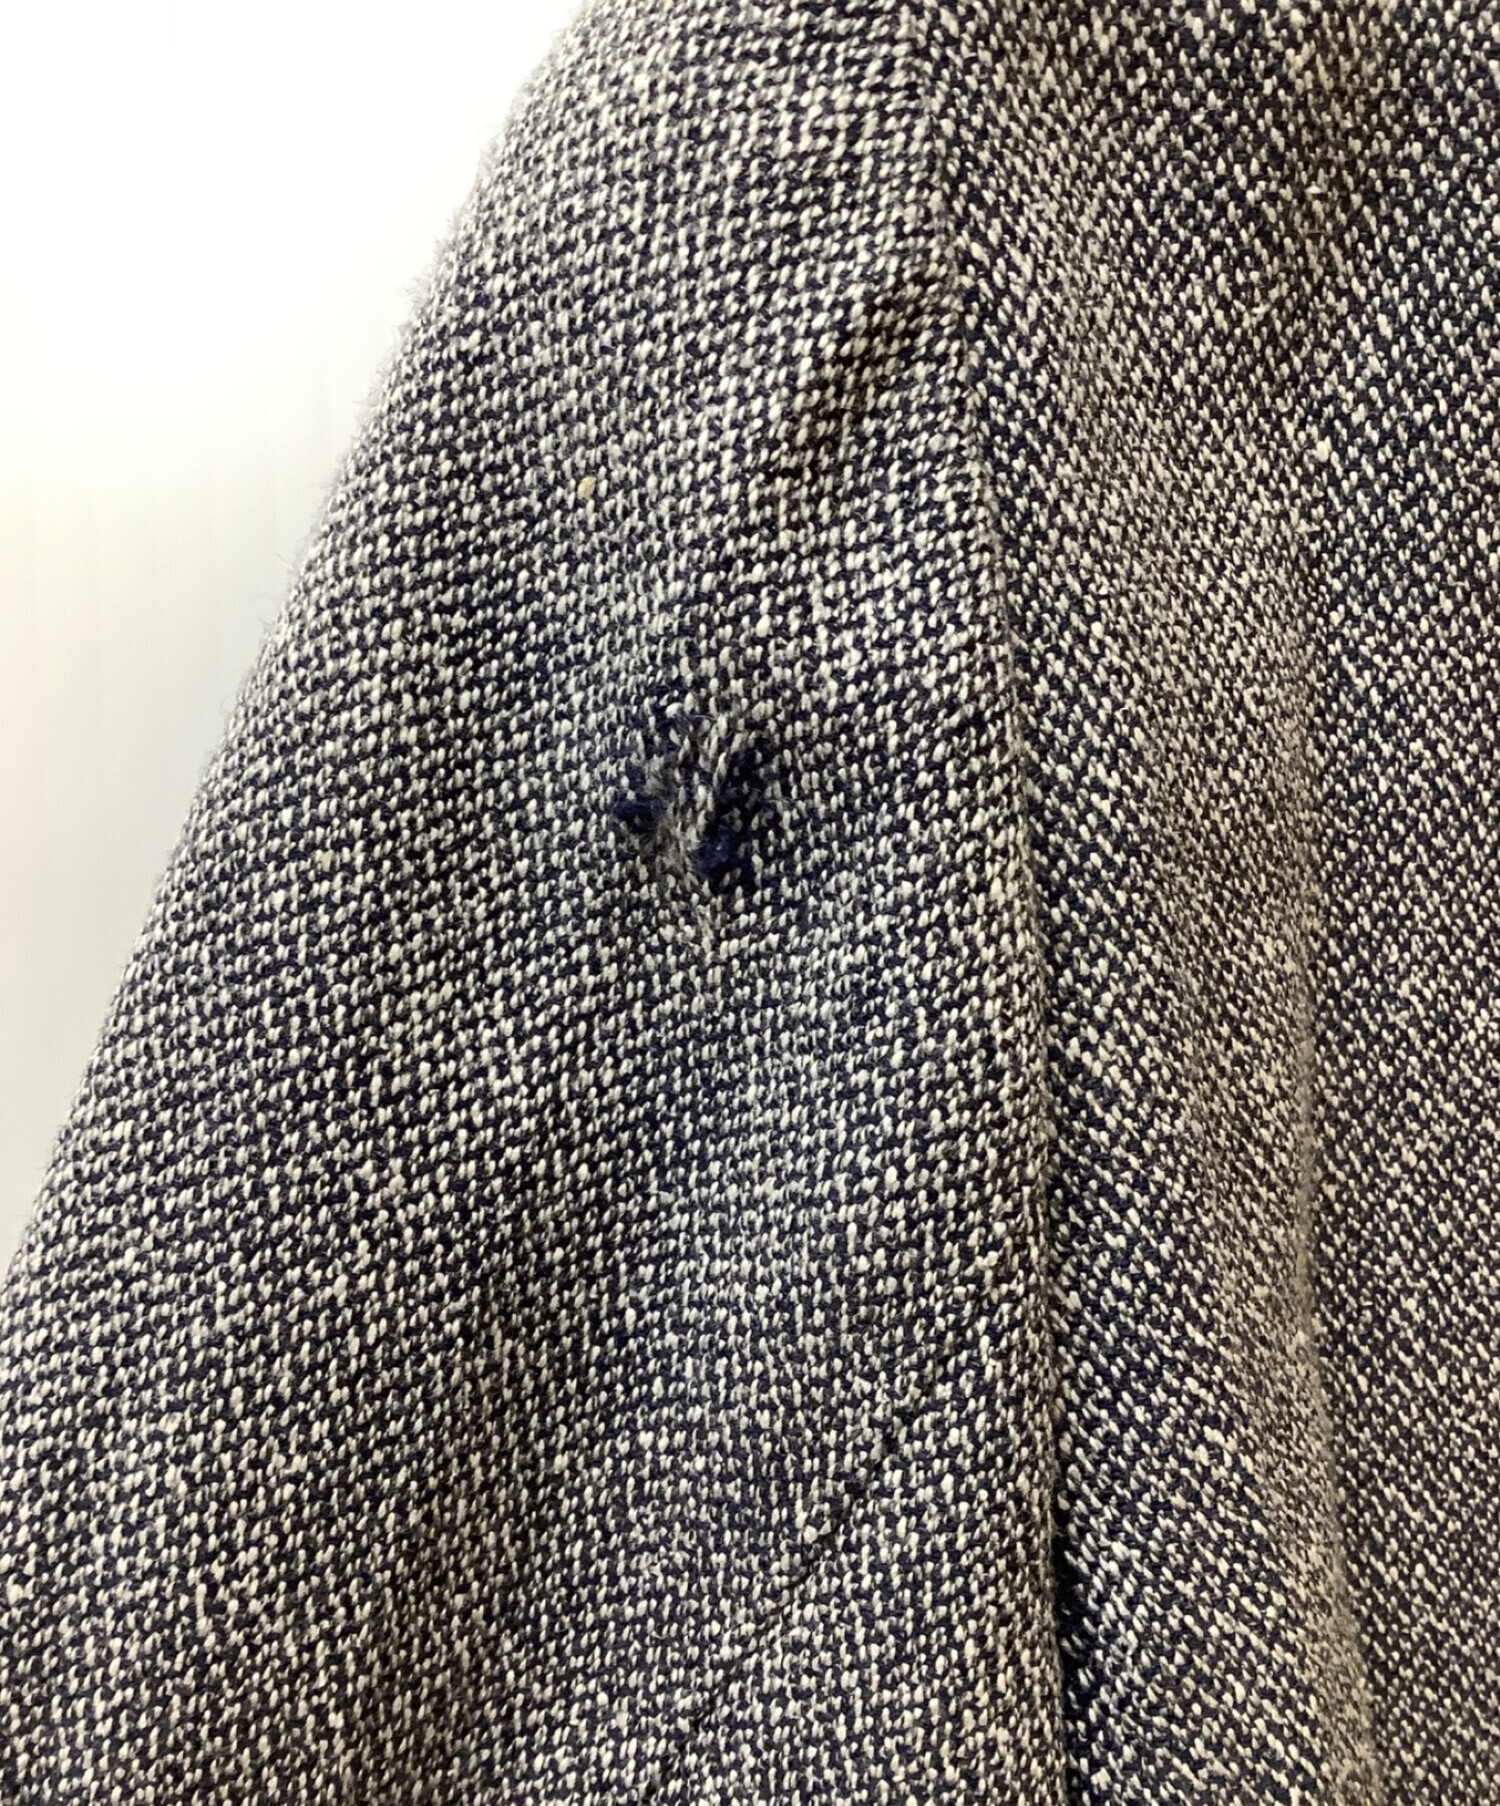 LARDINIラルディーニ　テーラードジャケット  新品未使用　44三越日本橋本店素材